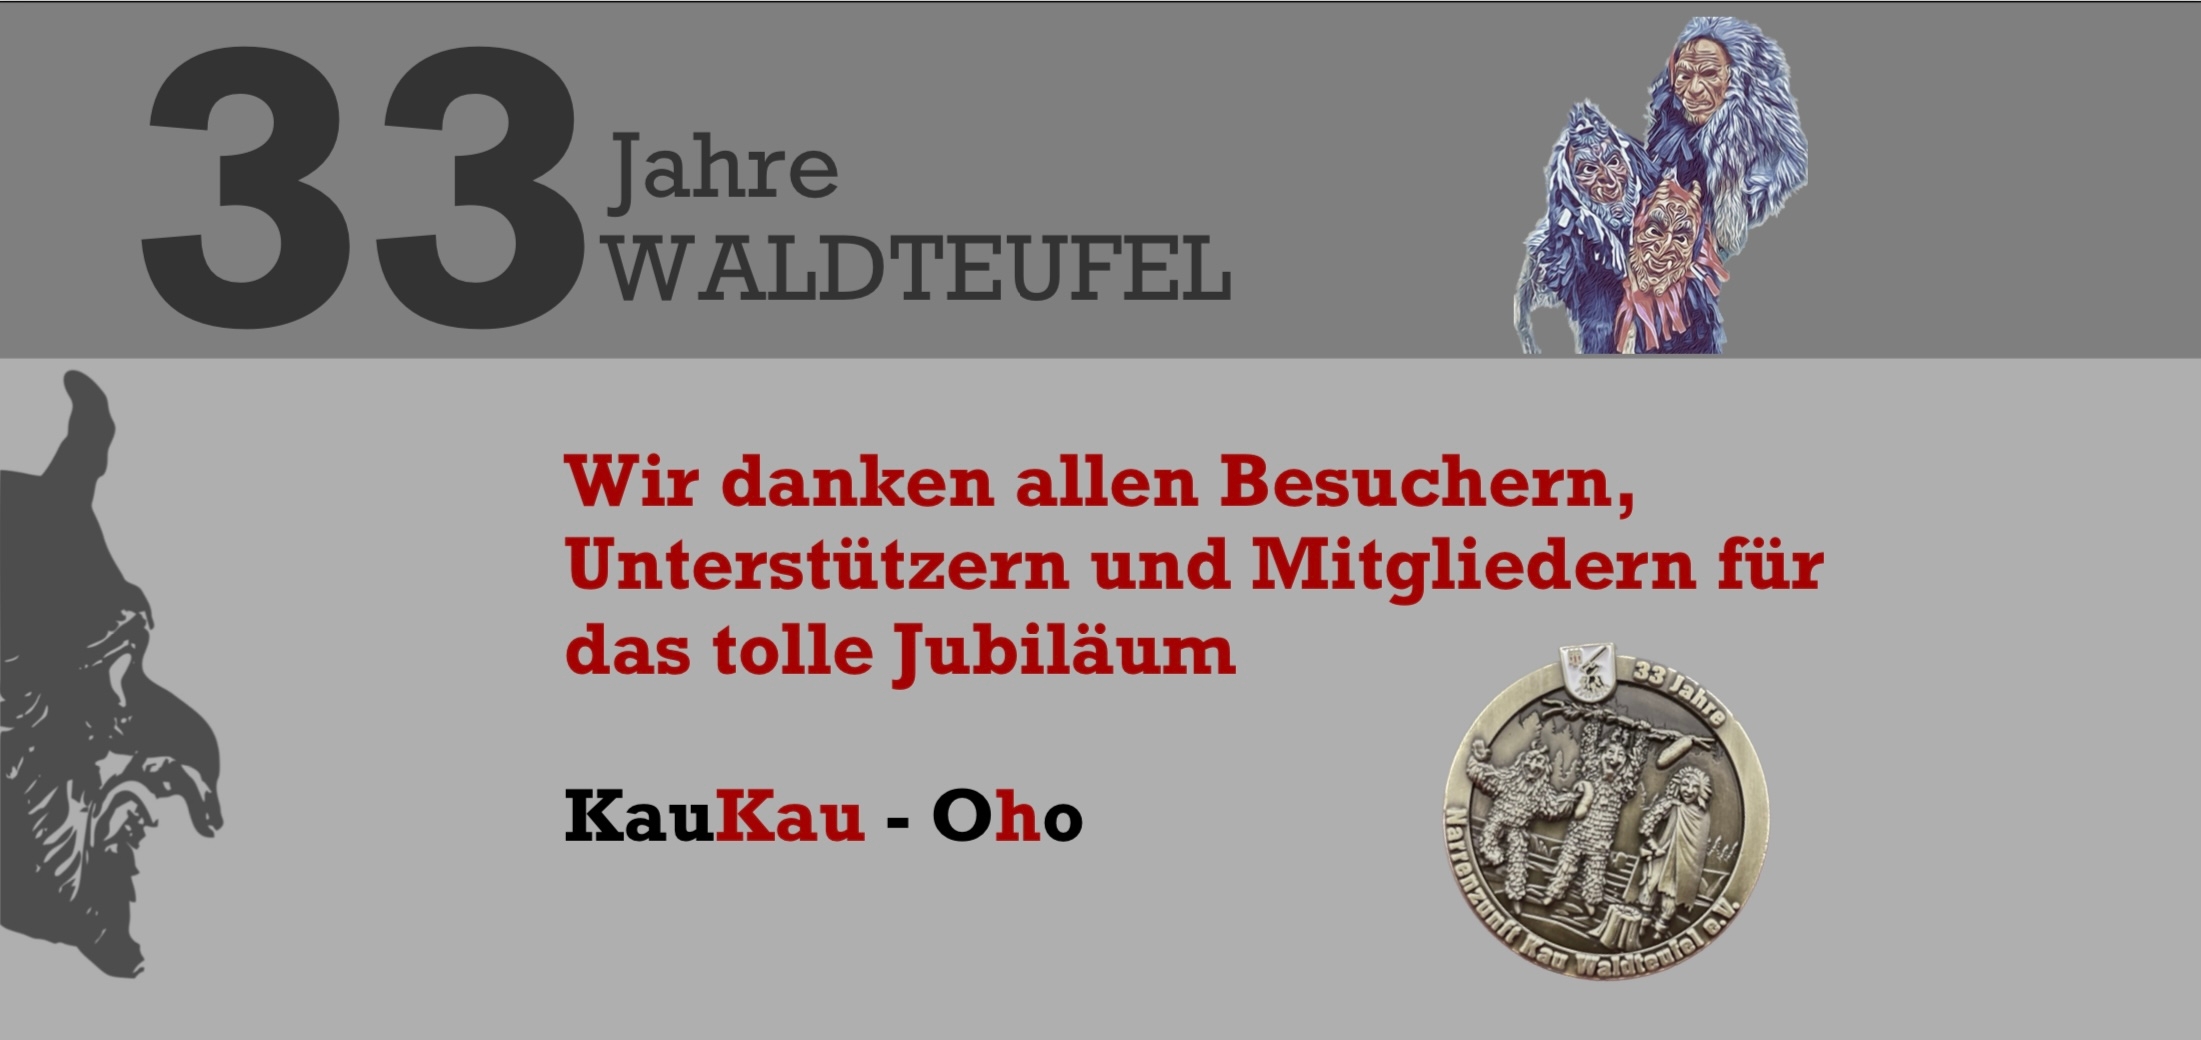 Wackelmeister - Benjamin Fink | Waldteufel